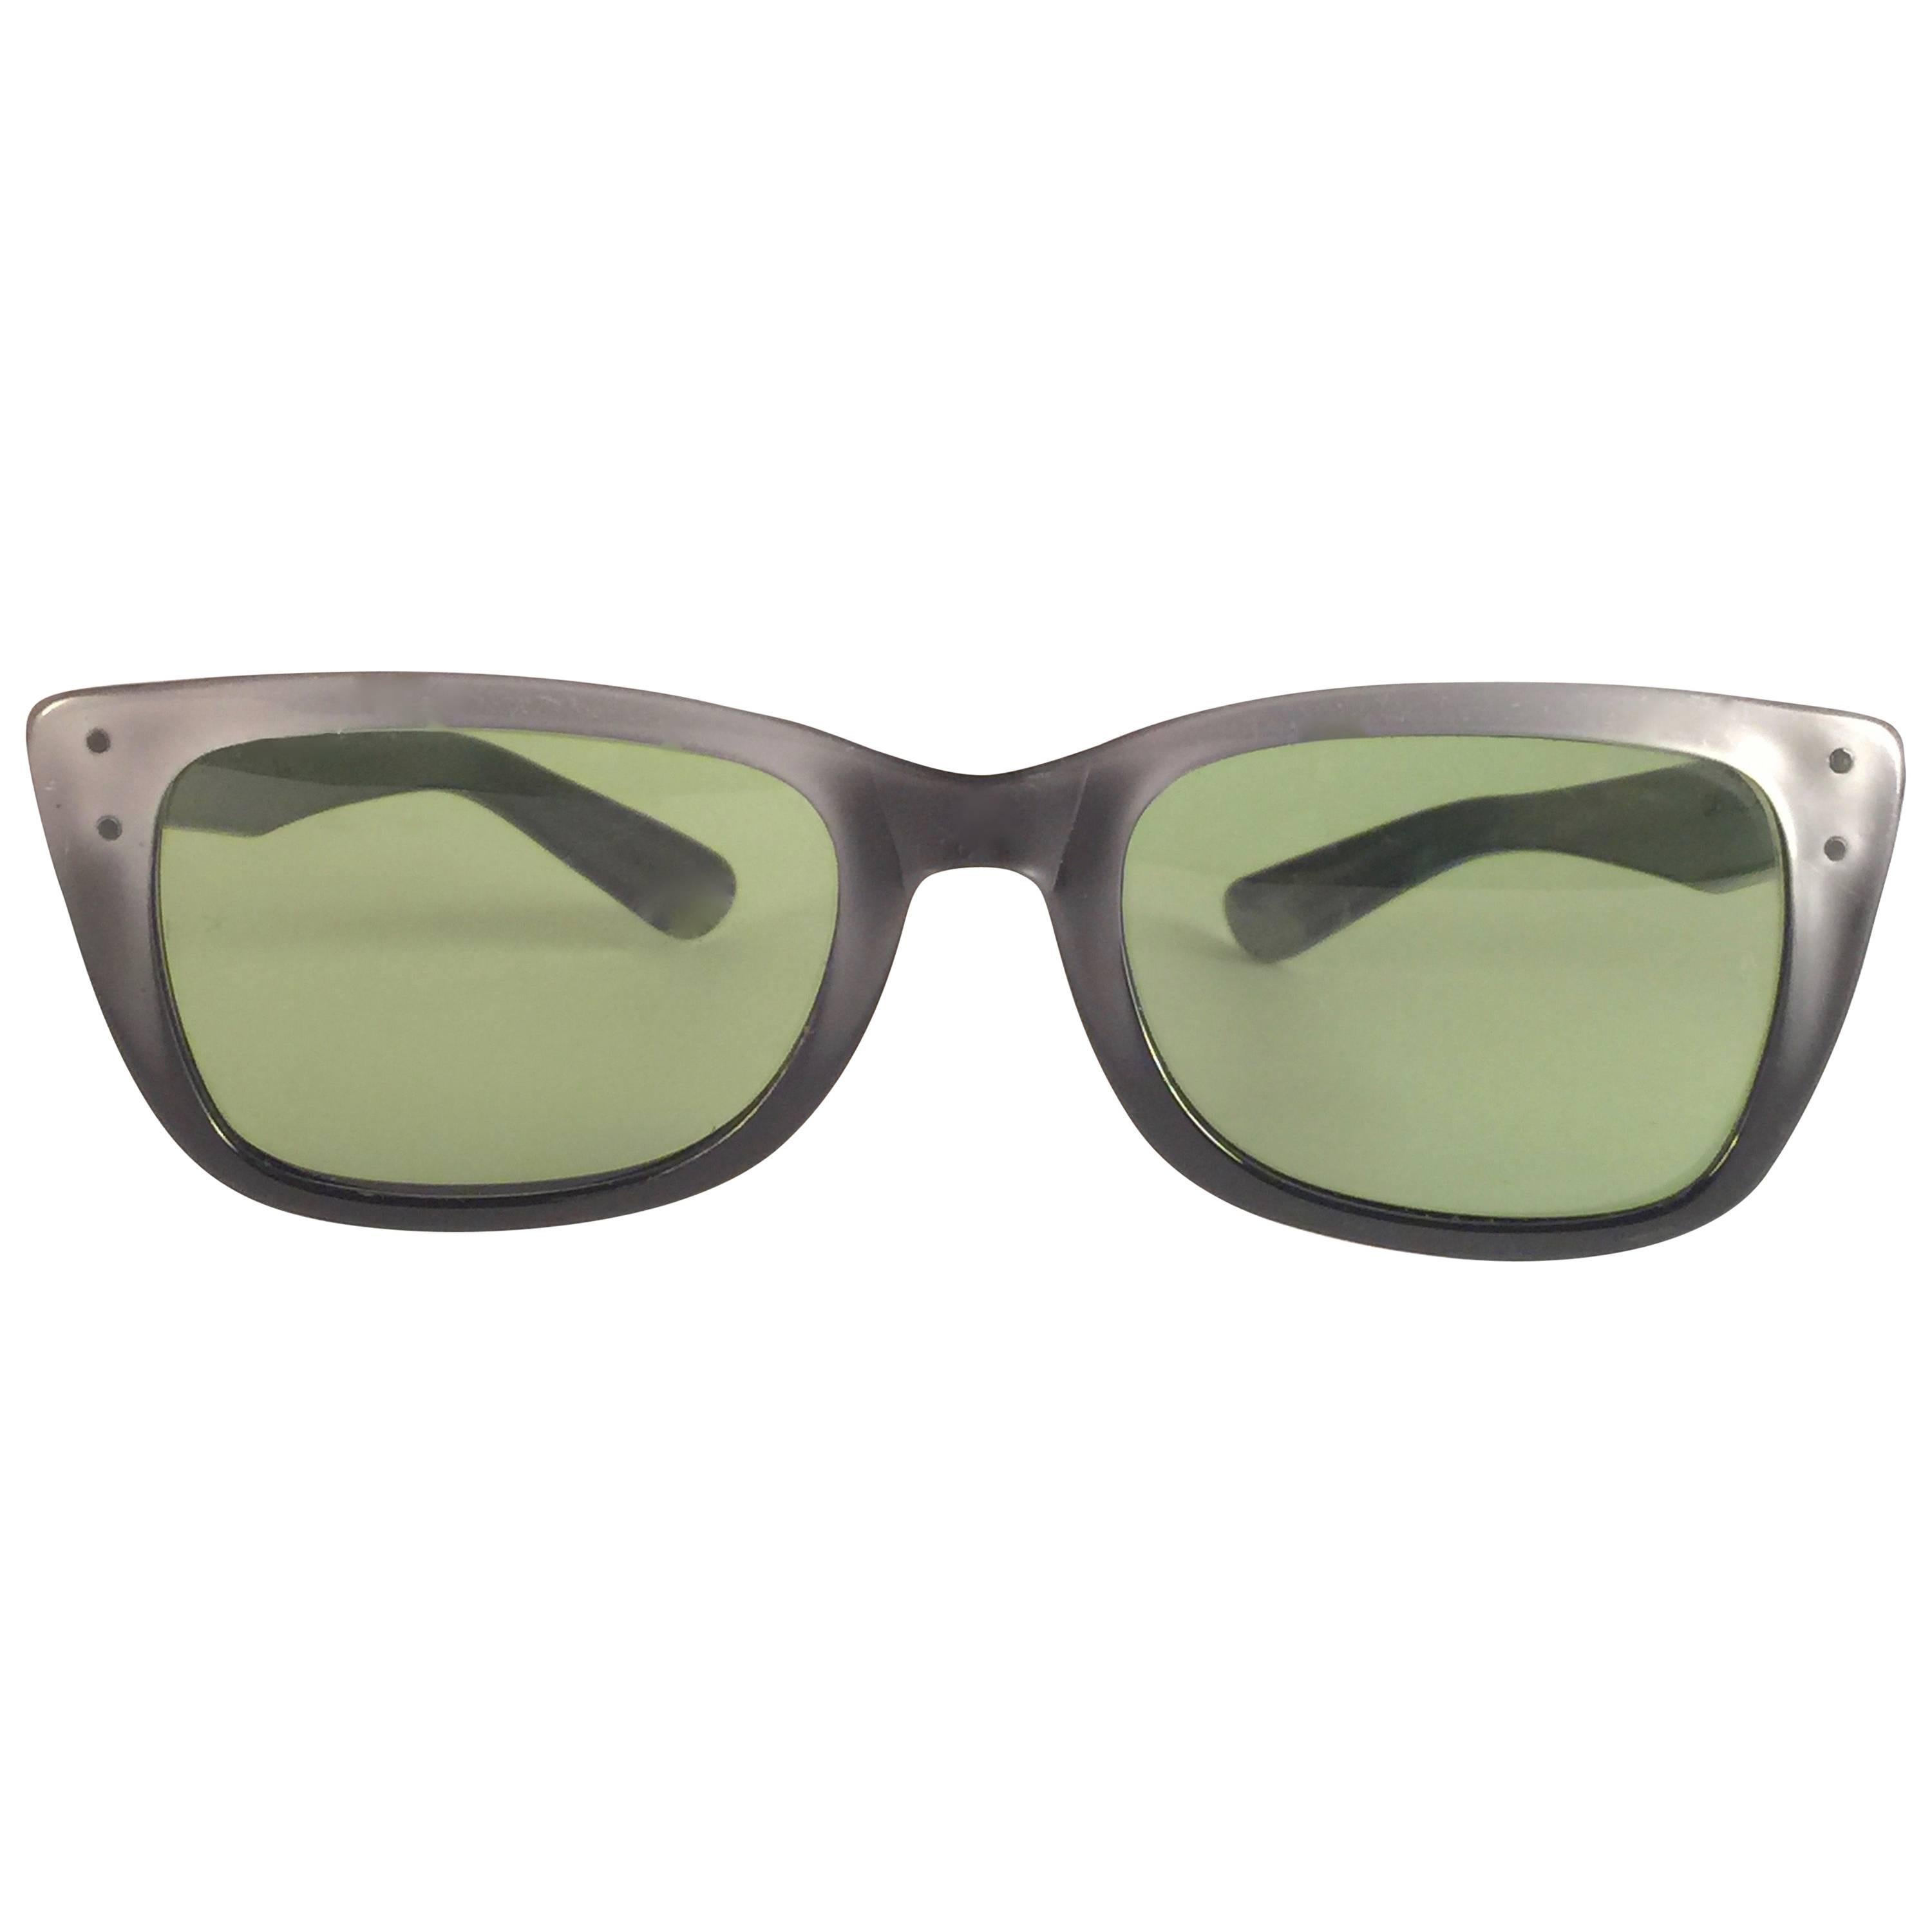 New Vintage Ray Ban Caribbean 1960's Mid Century G15 Lenses B&L USA Sunglasses